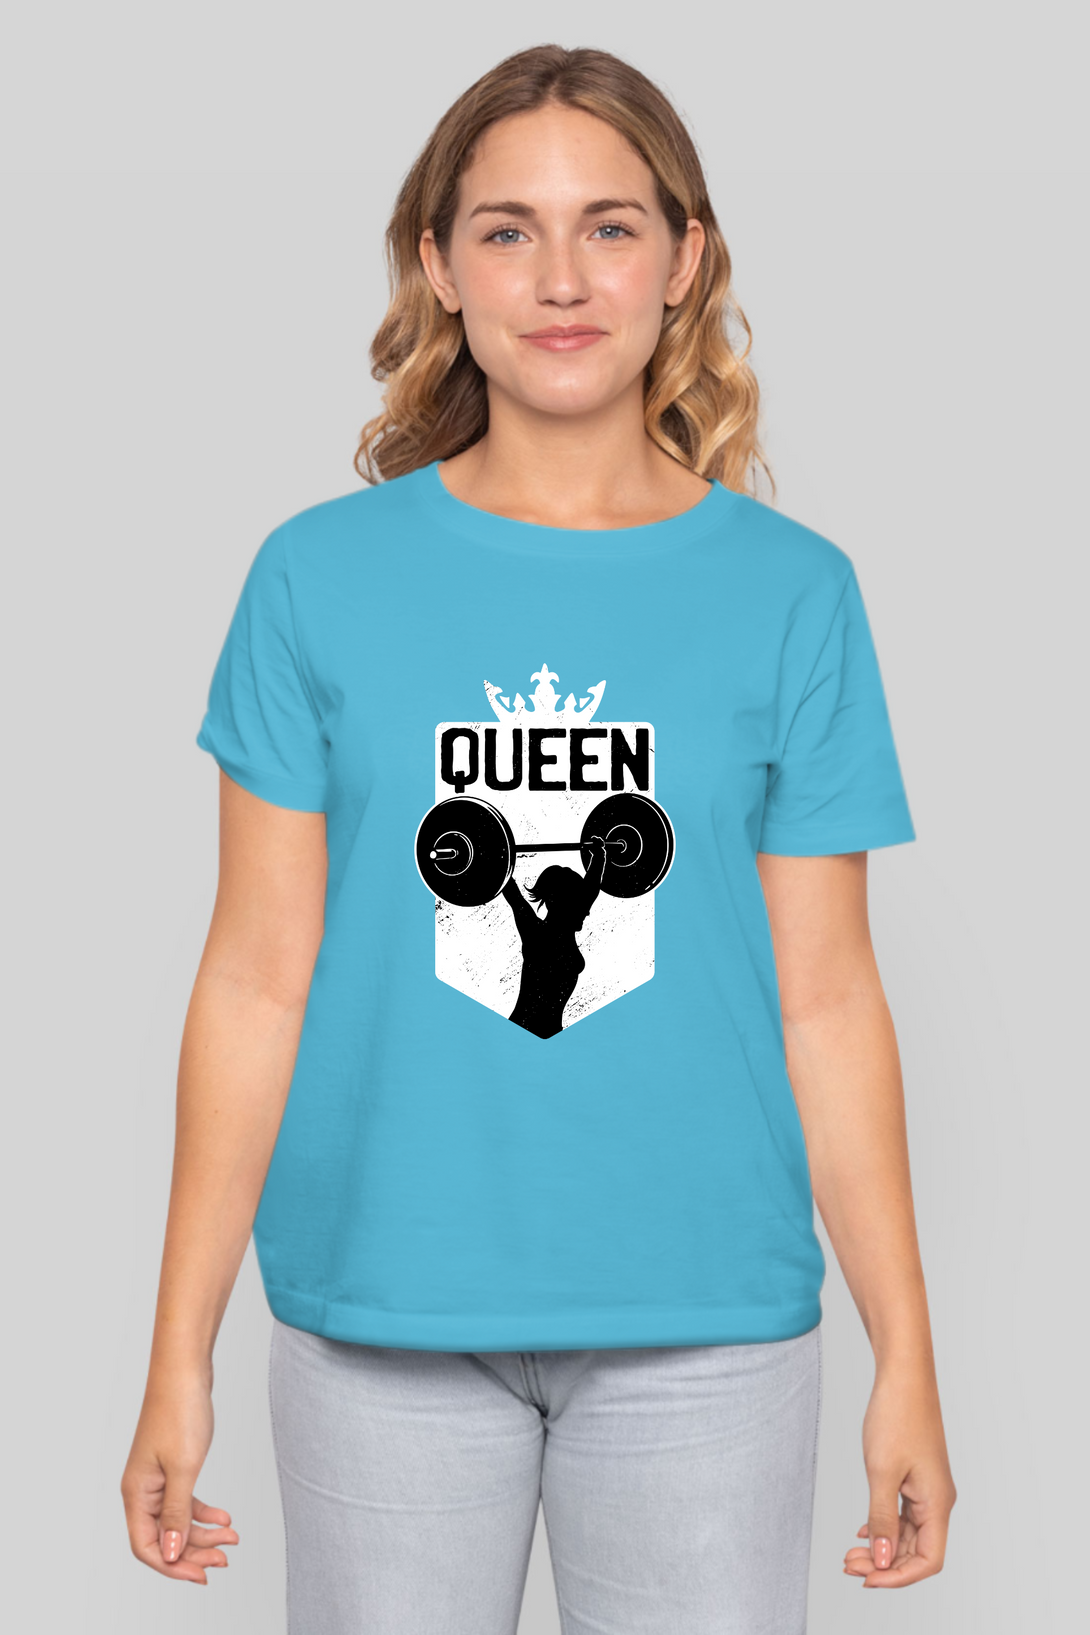 Queen Printed T-Shirt For Women - WowWaves - 9